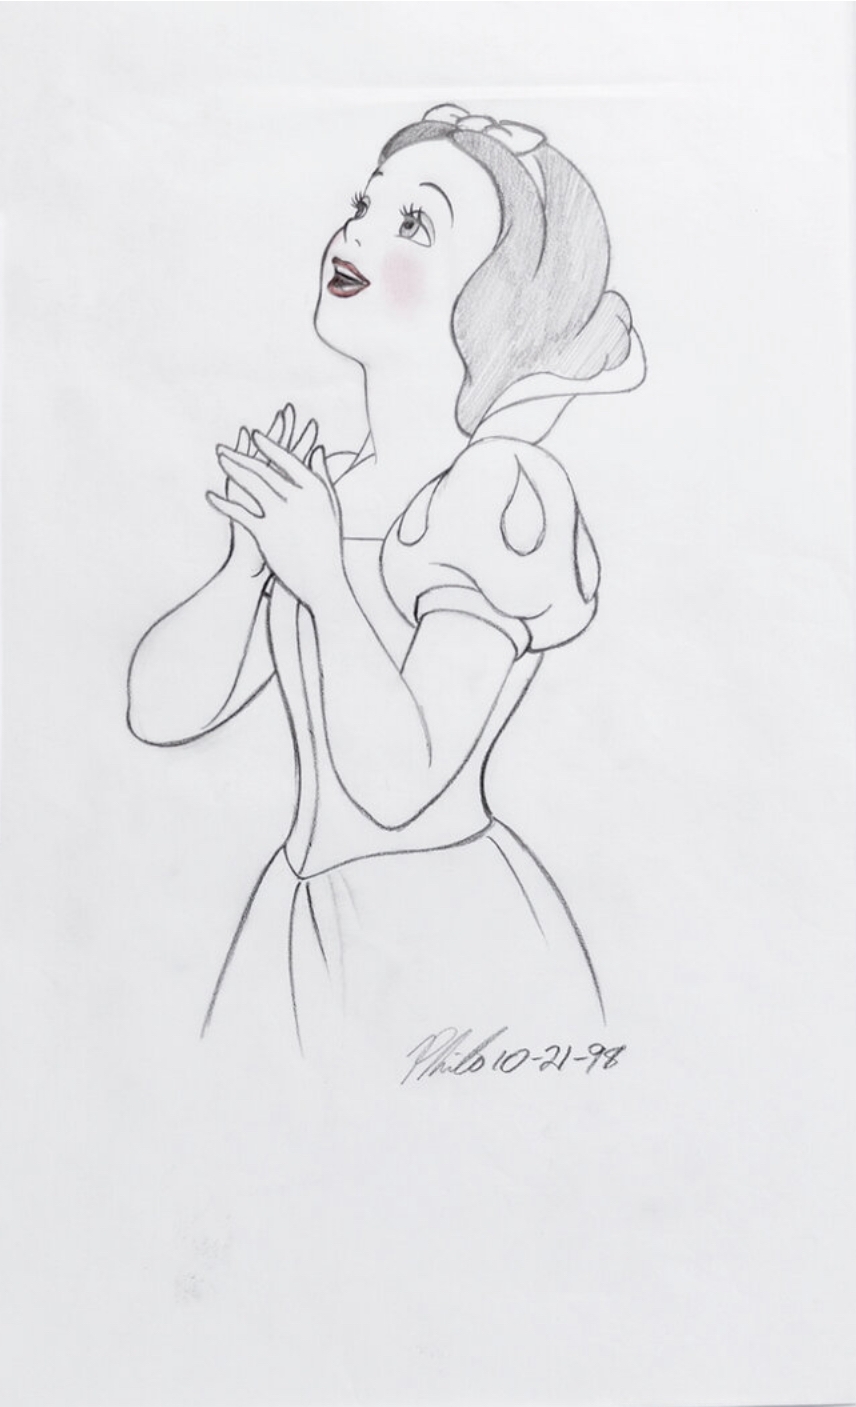 Snow White Sketching Illustrations Disney Sketch SnowWhite  wwwJoLinsdellcom  Illustration Drawings Disney dream